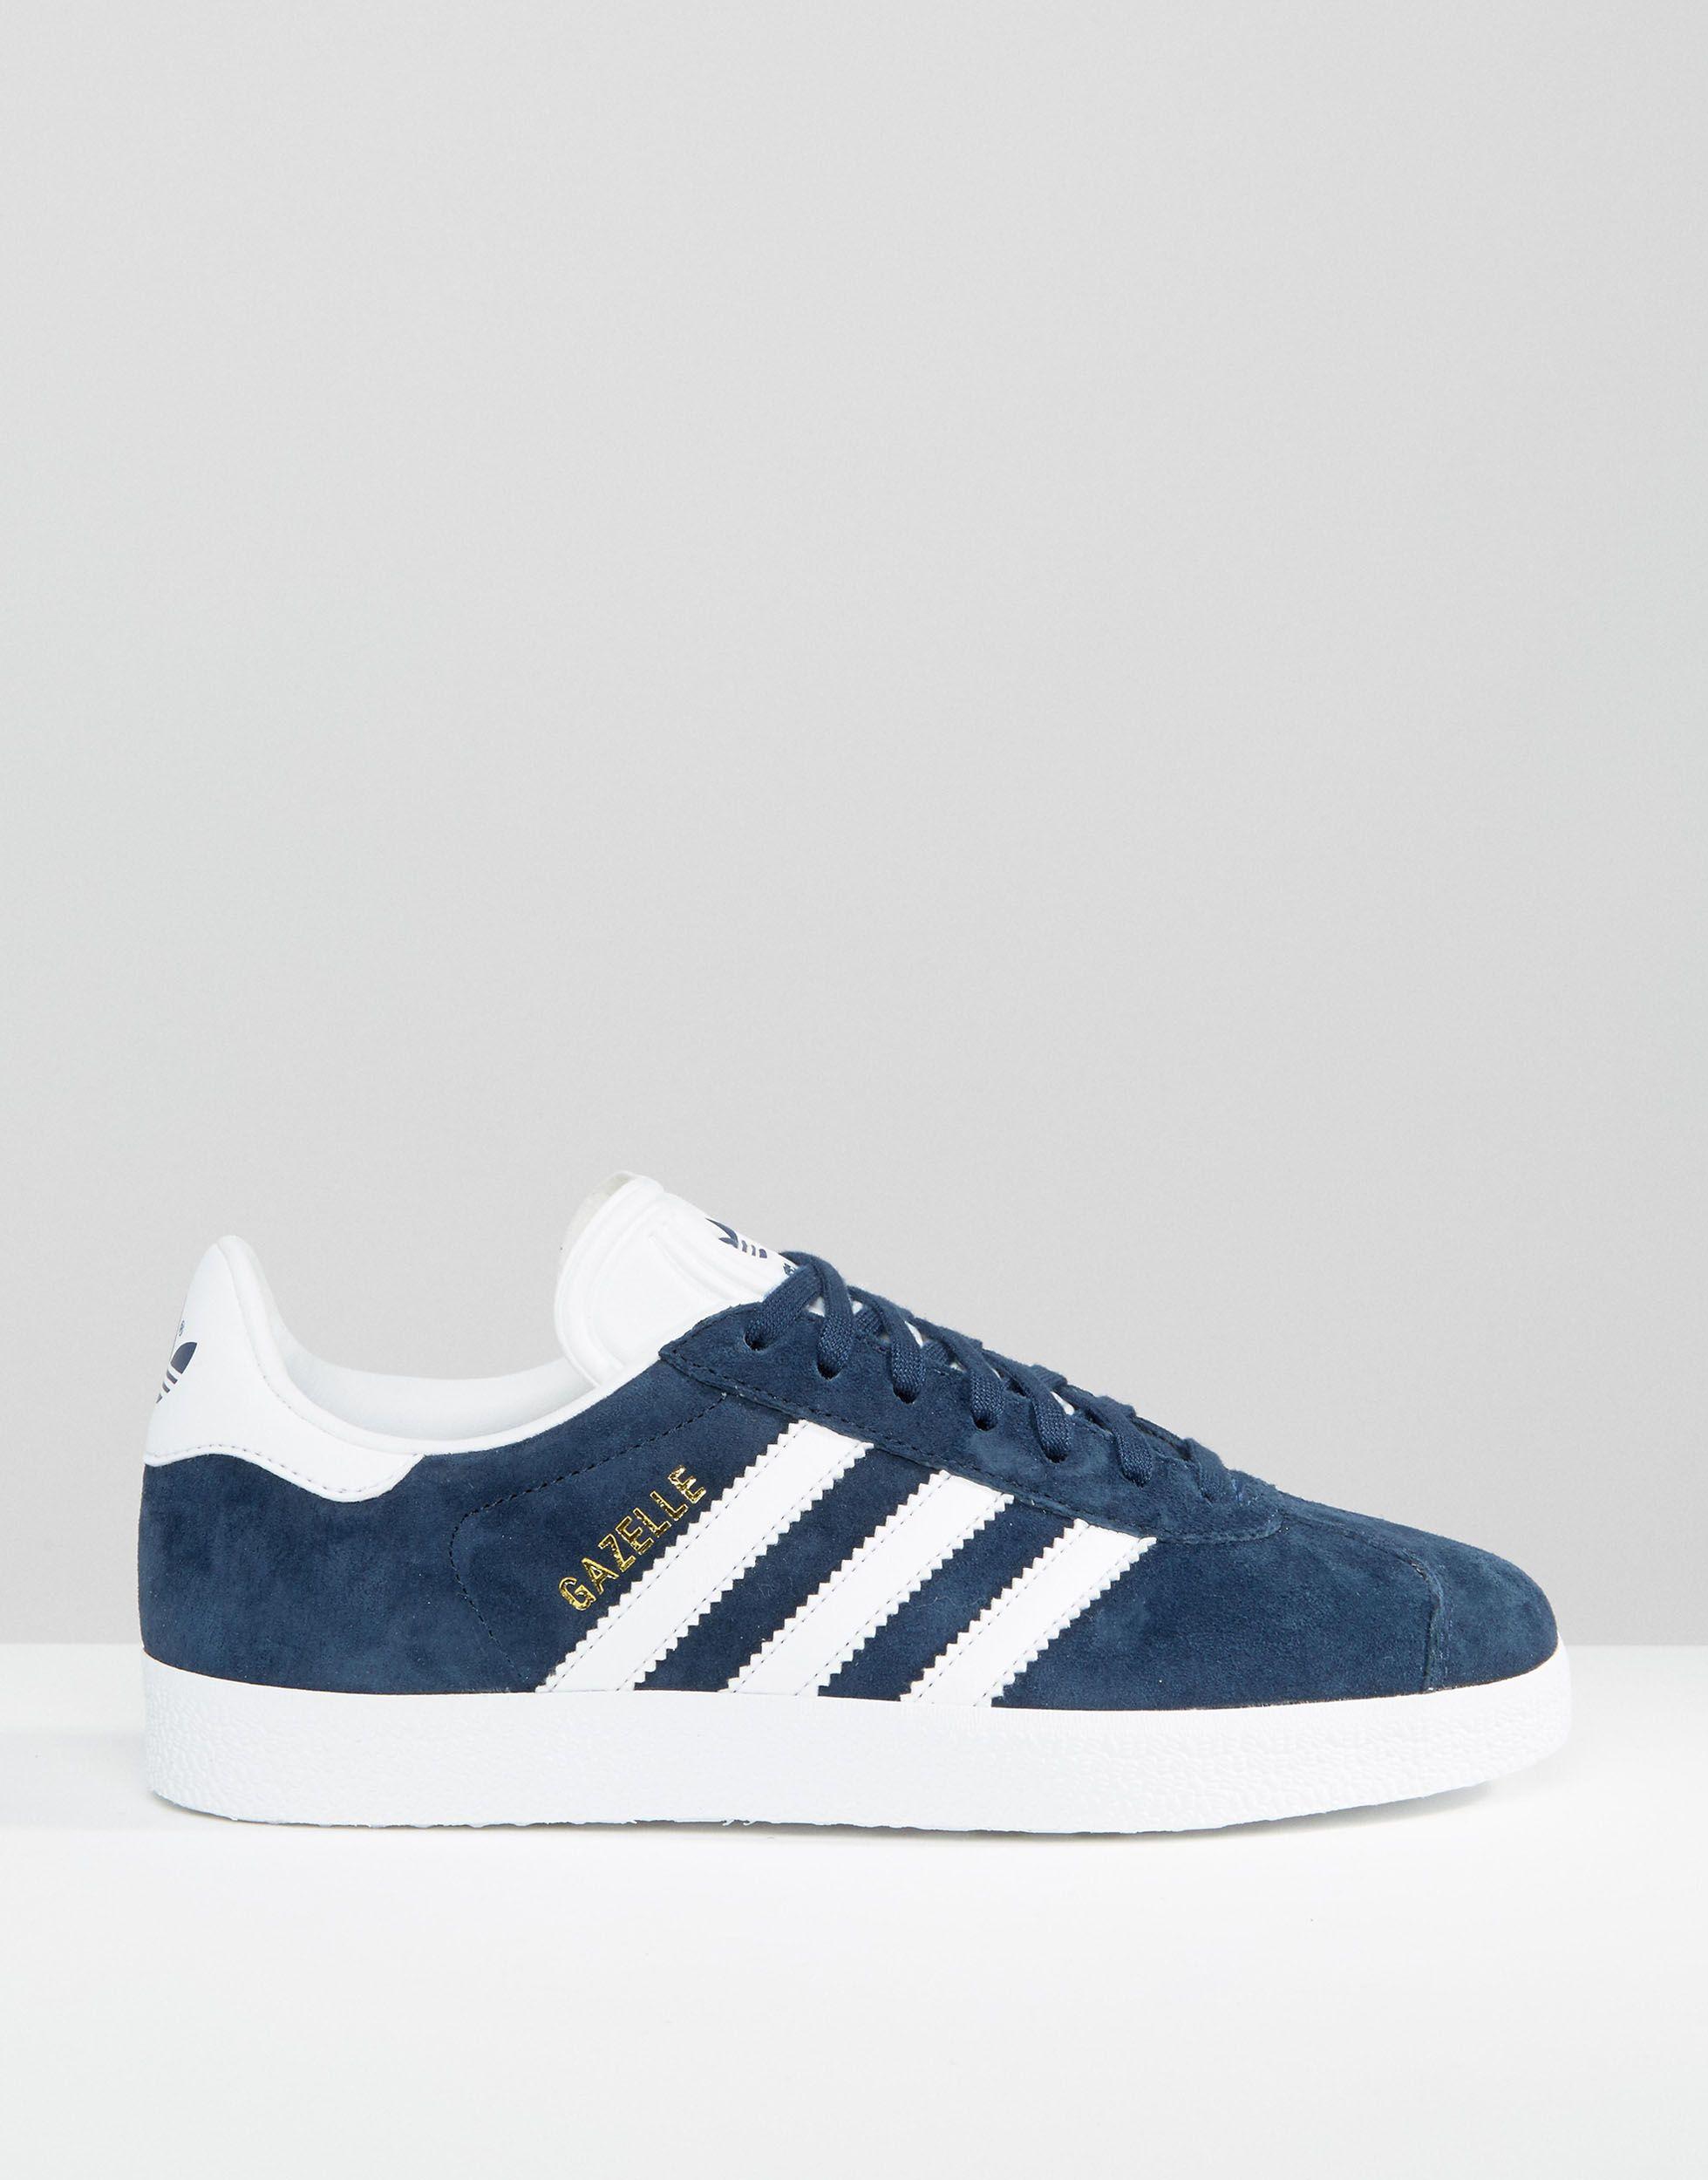 adidas Originals Suede Gazelle Sneakers in Navy (Blue) - Save 41 ...